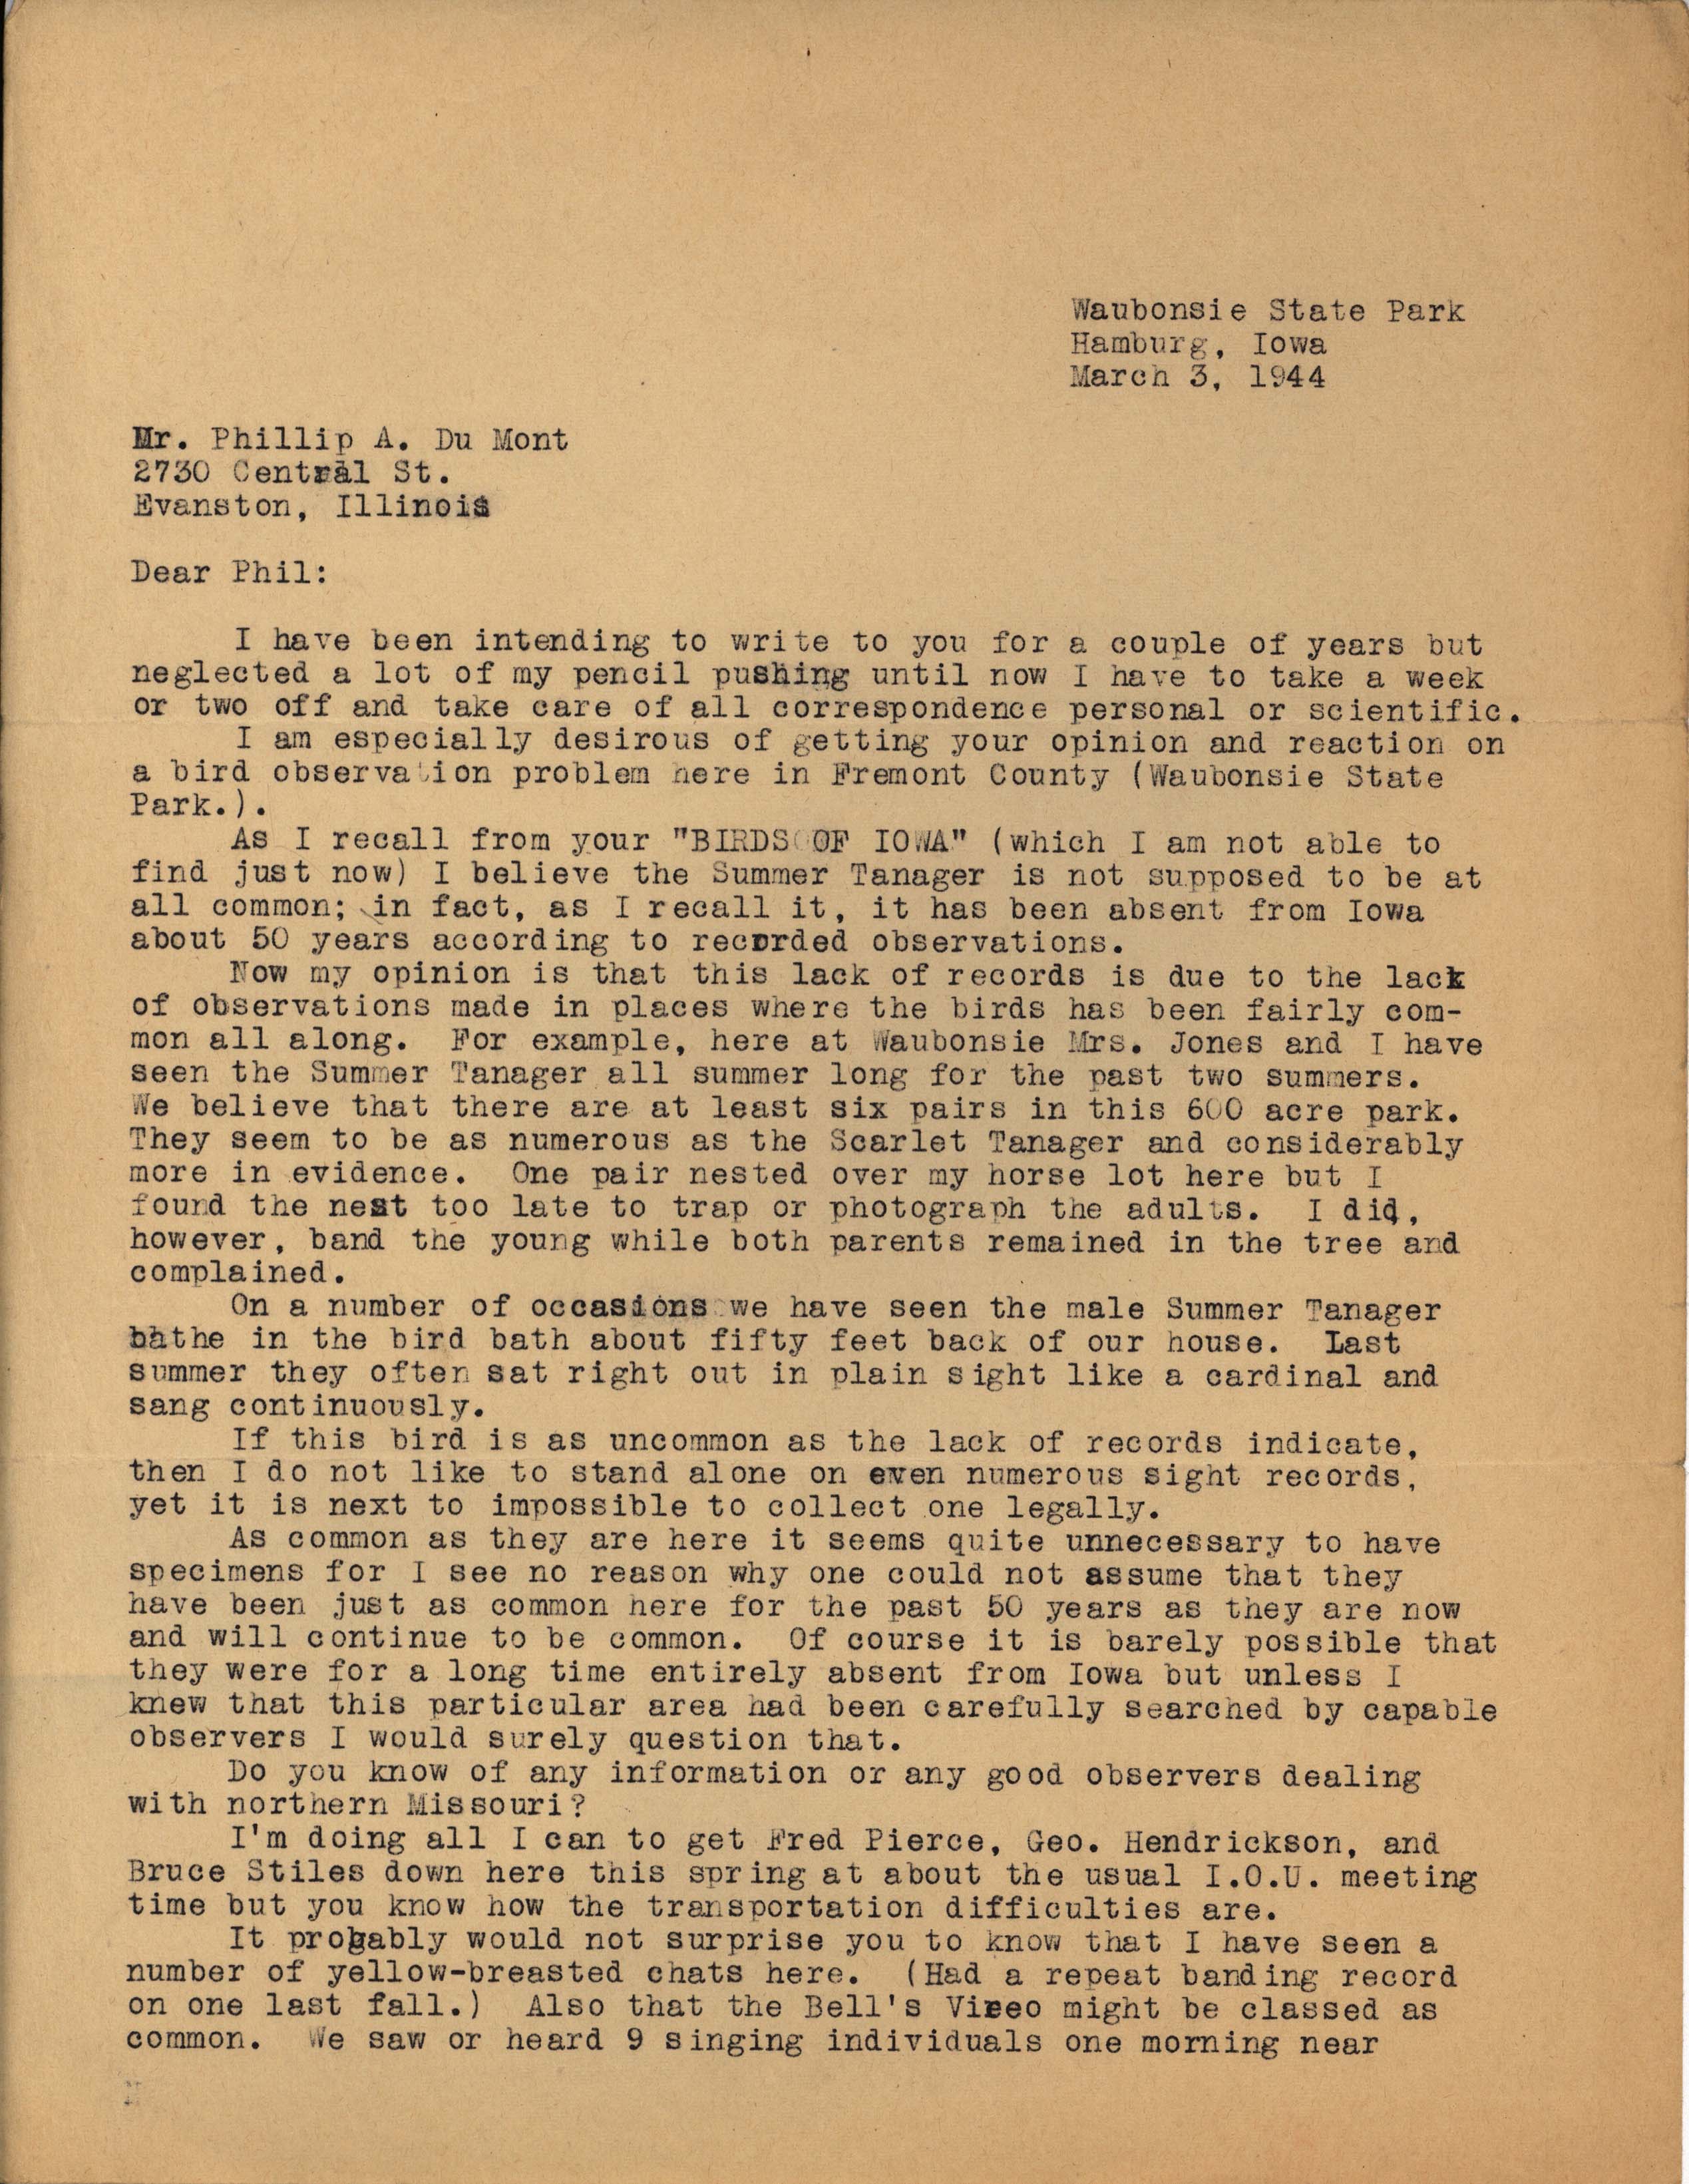 Myrle Jones letter to Philip DuMont regarding rare birds, March 3, 1944